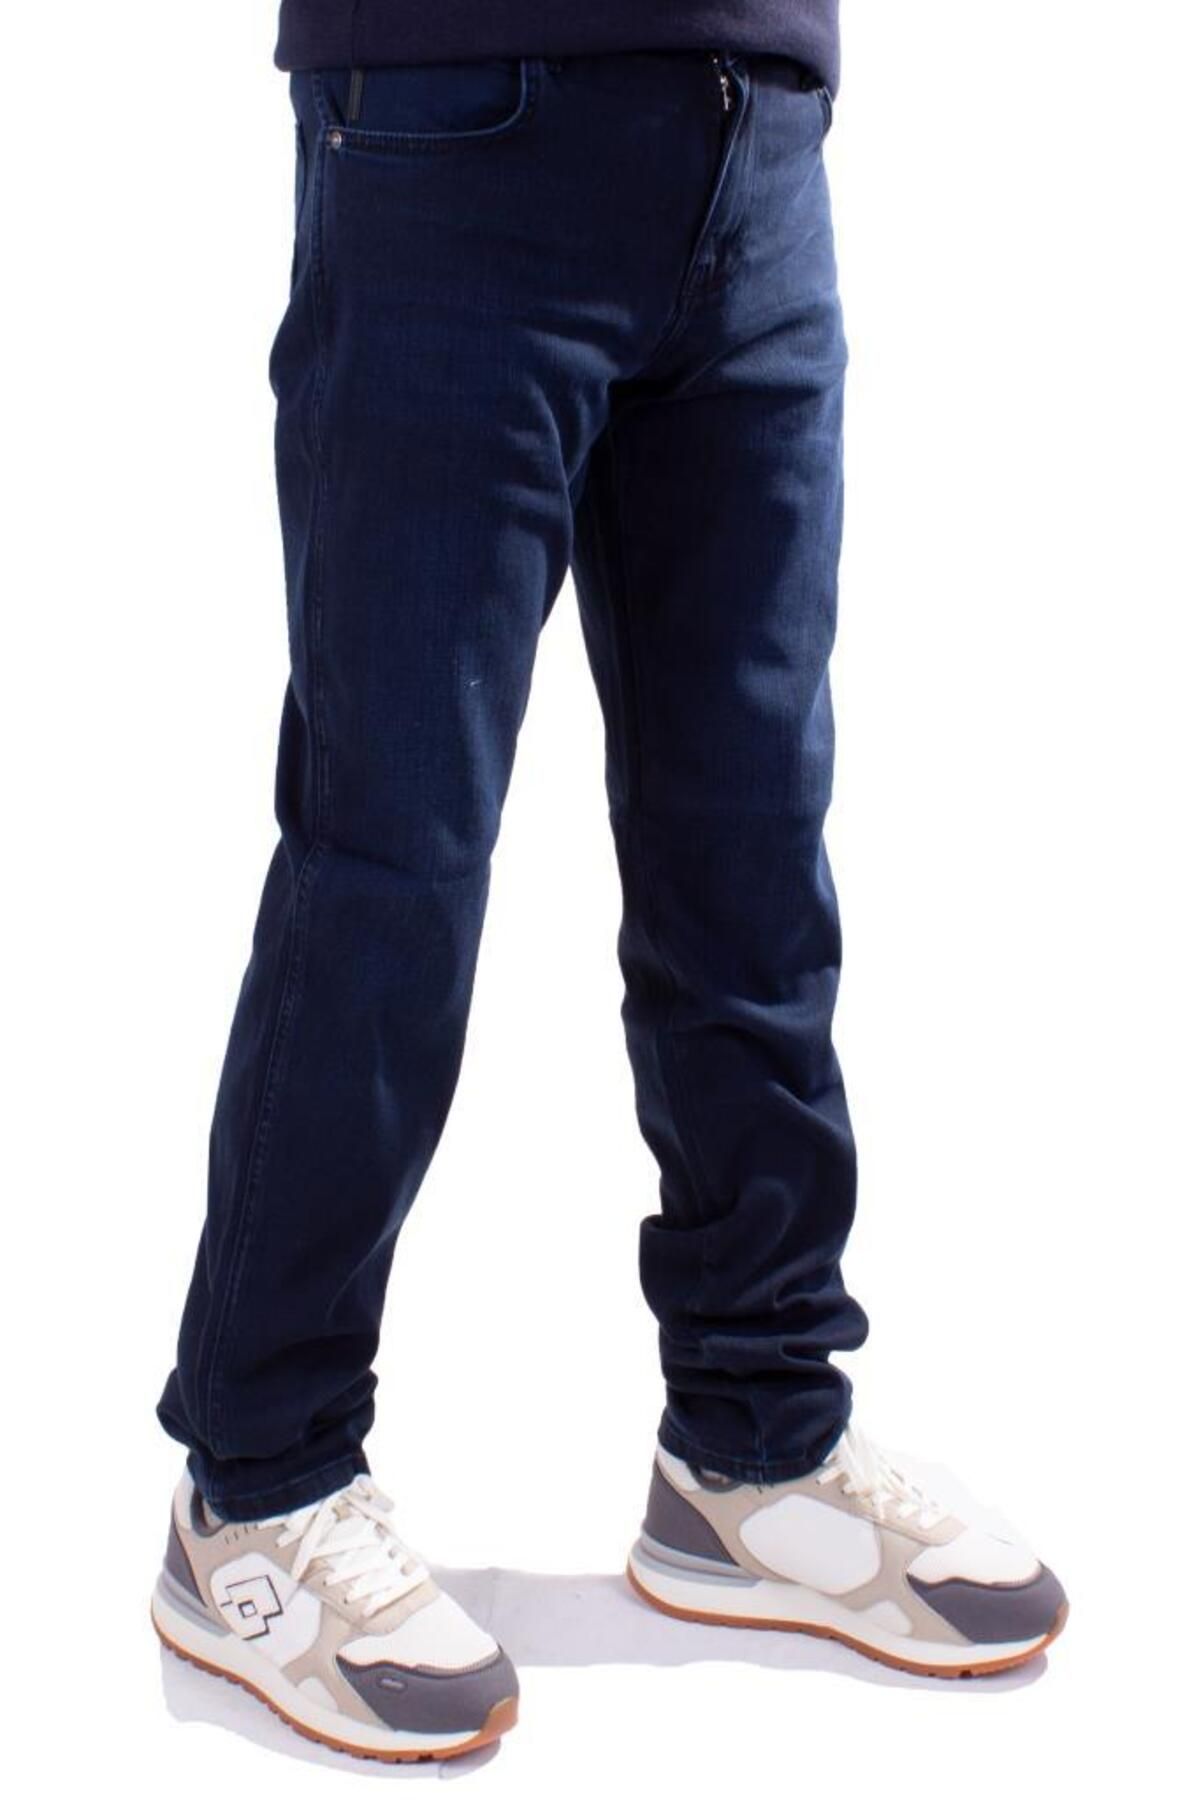 Twister Jeans Twister Vegas 132-282 Lacivert Yüksek Bel Rahat Paça Erkek Jeans Pantolon